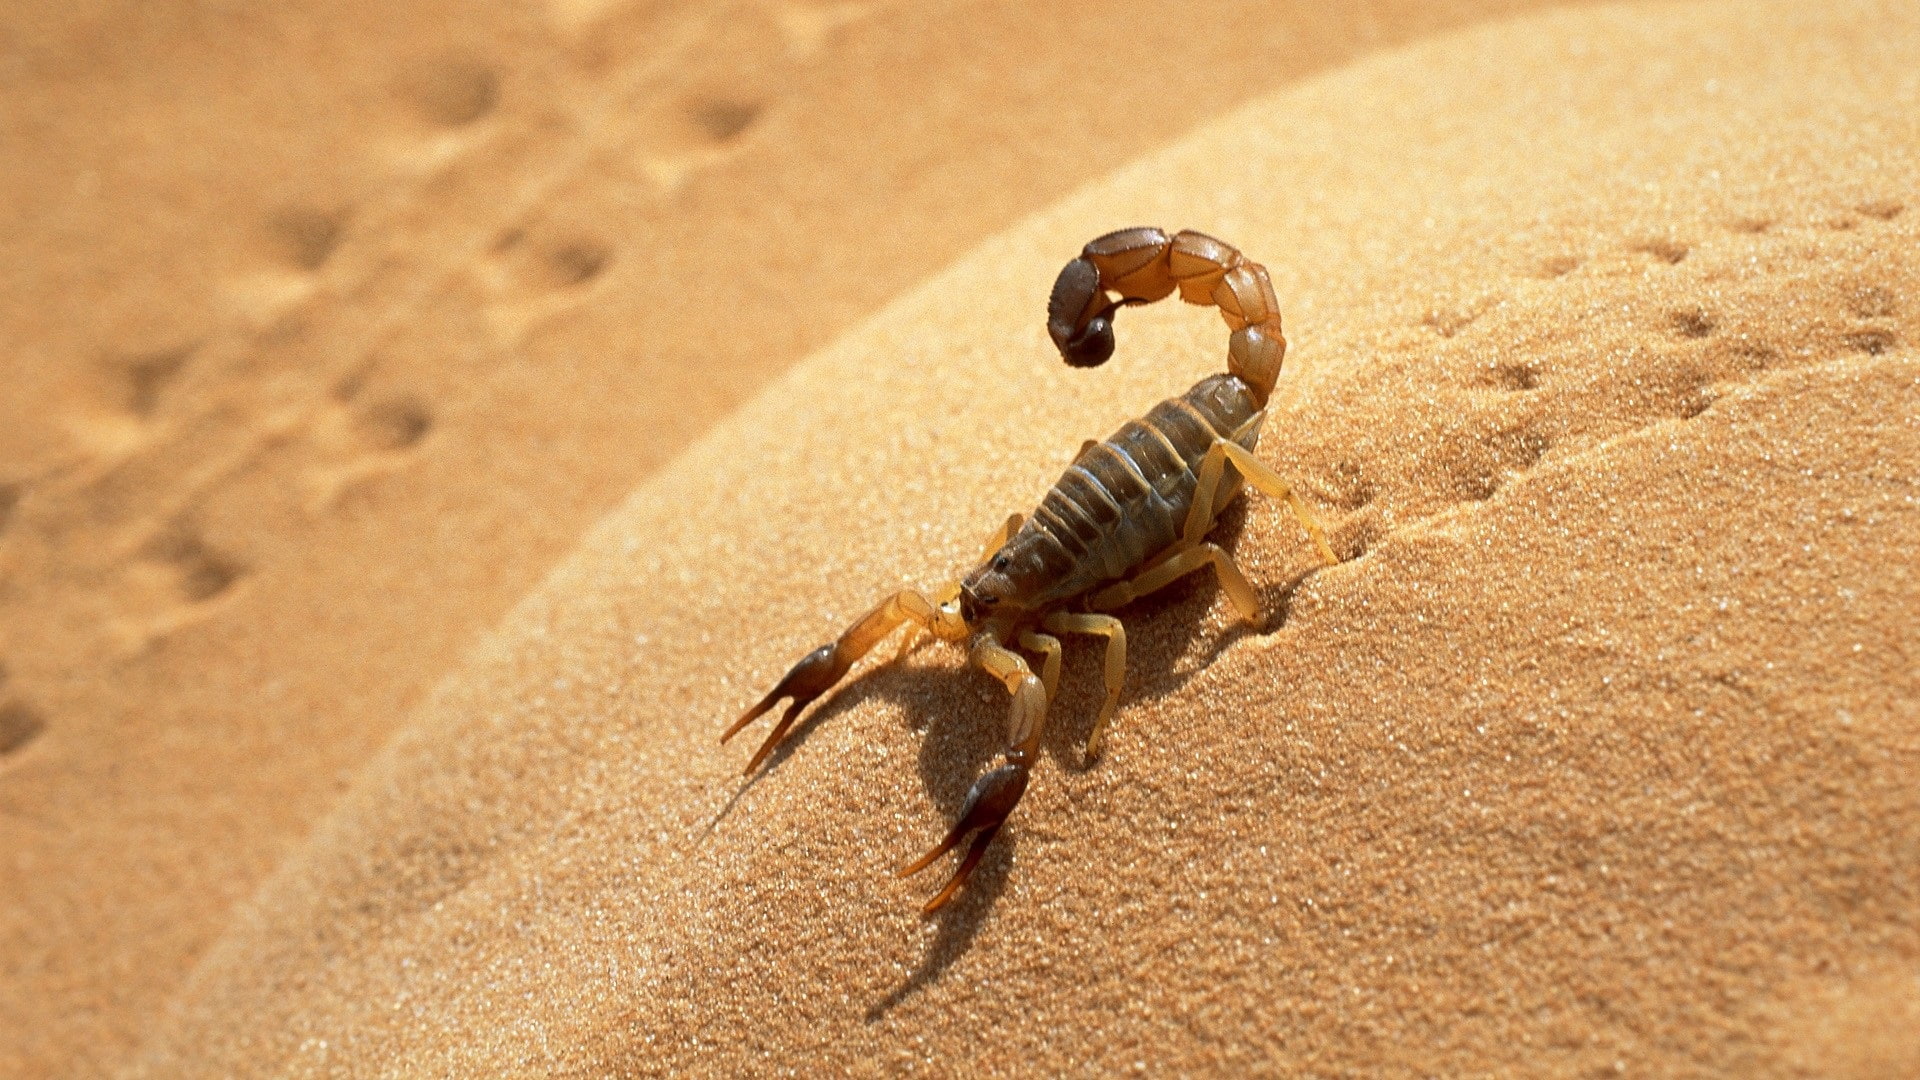 Scorpion in the desert